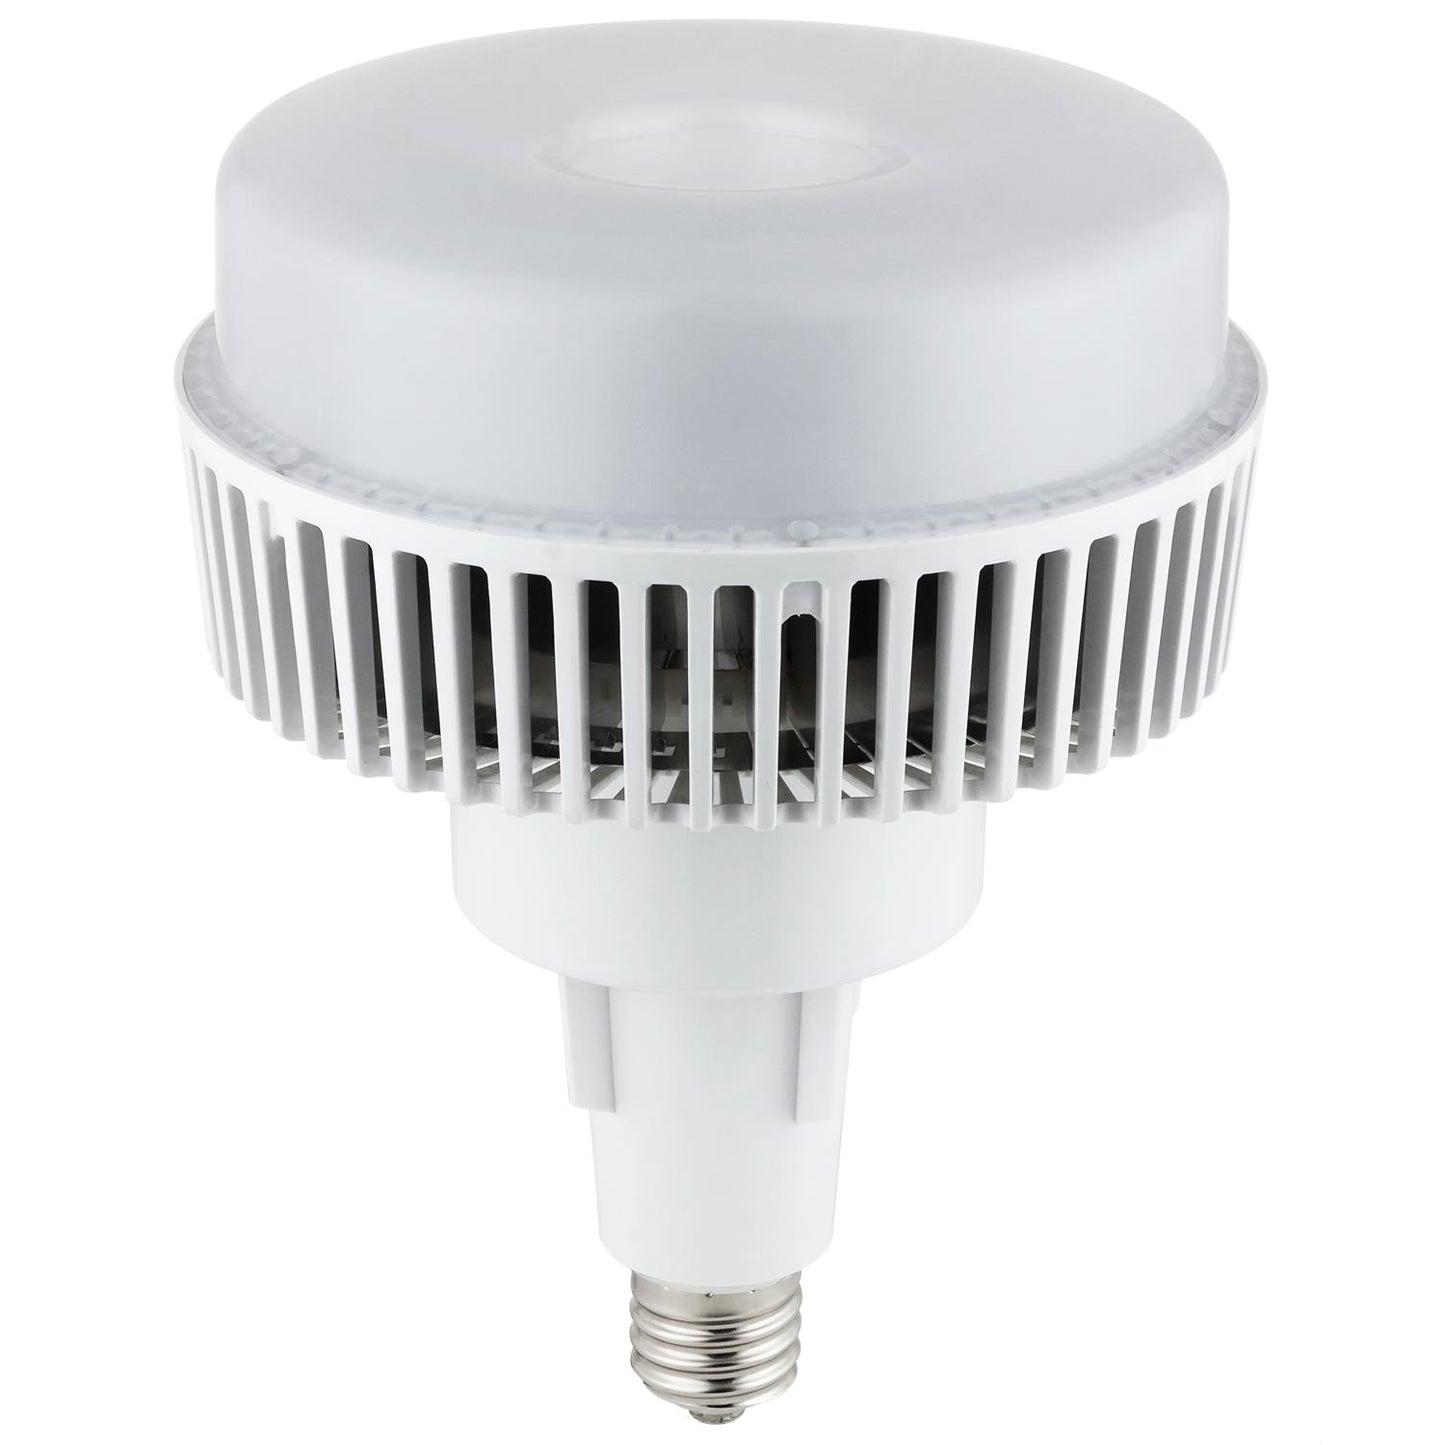 Sunlite 80868-SU LED High Bay Replacement Bulb  With E39 Mogul Base, 15,000 Lumens, 120-277 V, 120 Watt - 250 W Equivalent , 50K - Super White